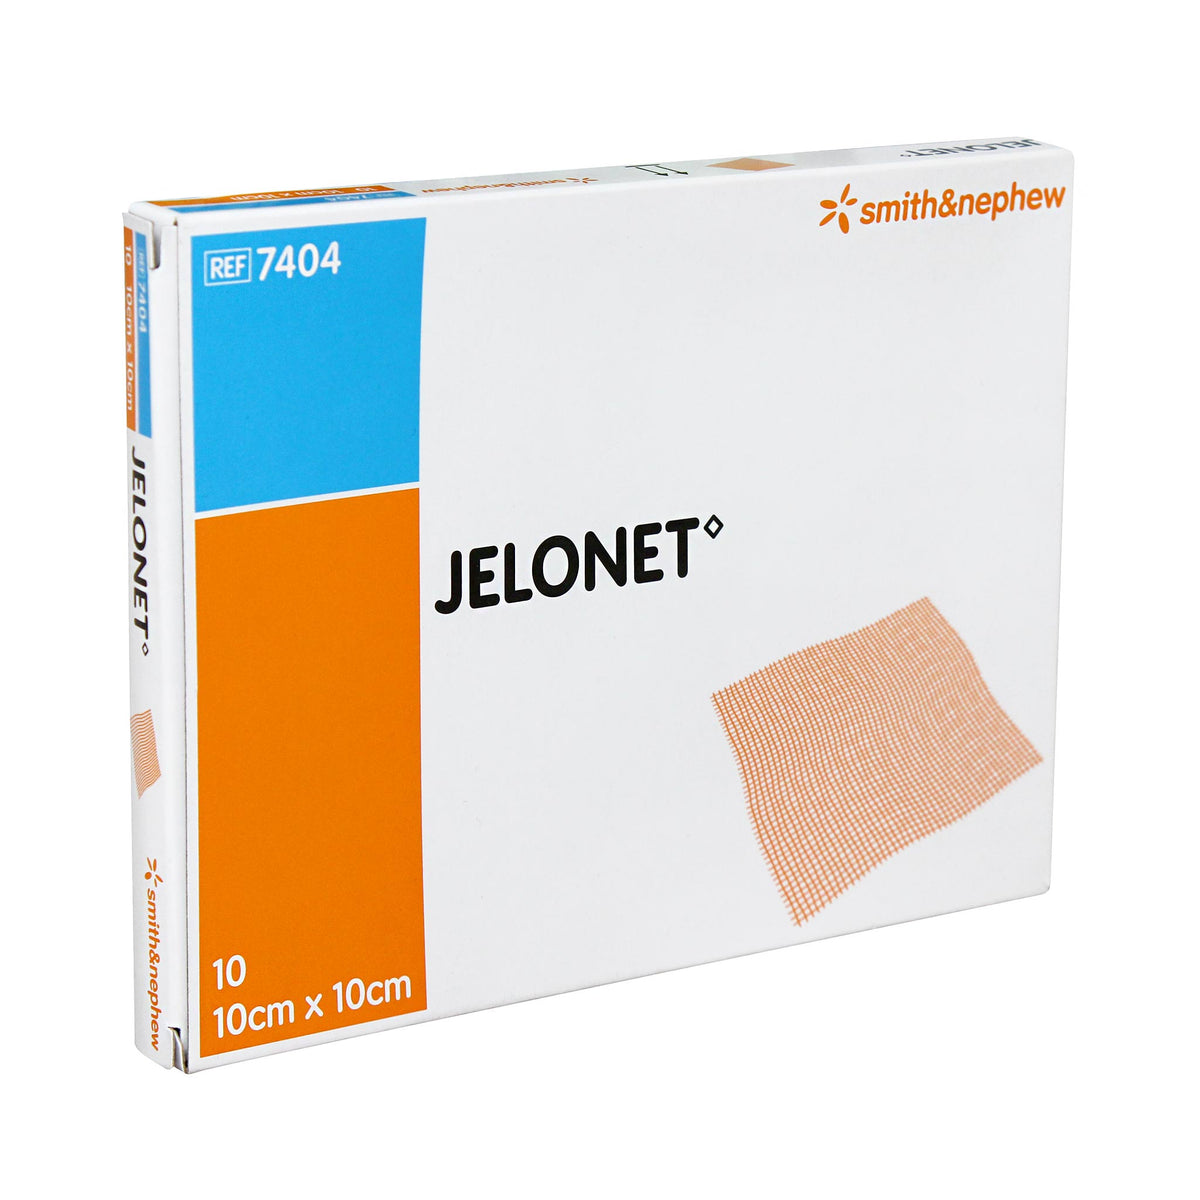 Jelonet Paraffin Gauze Wound Dressing 10cm x 10cm - Box 10